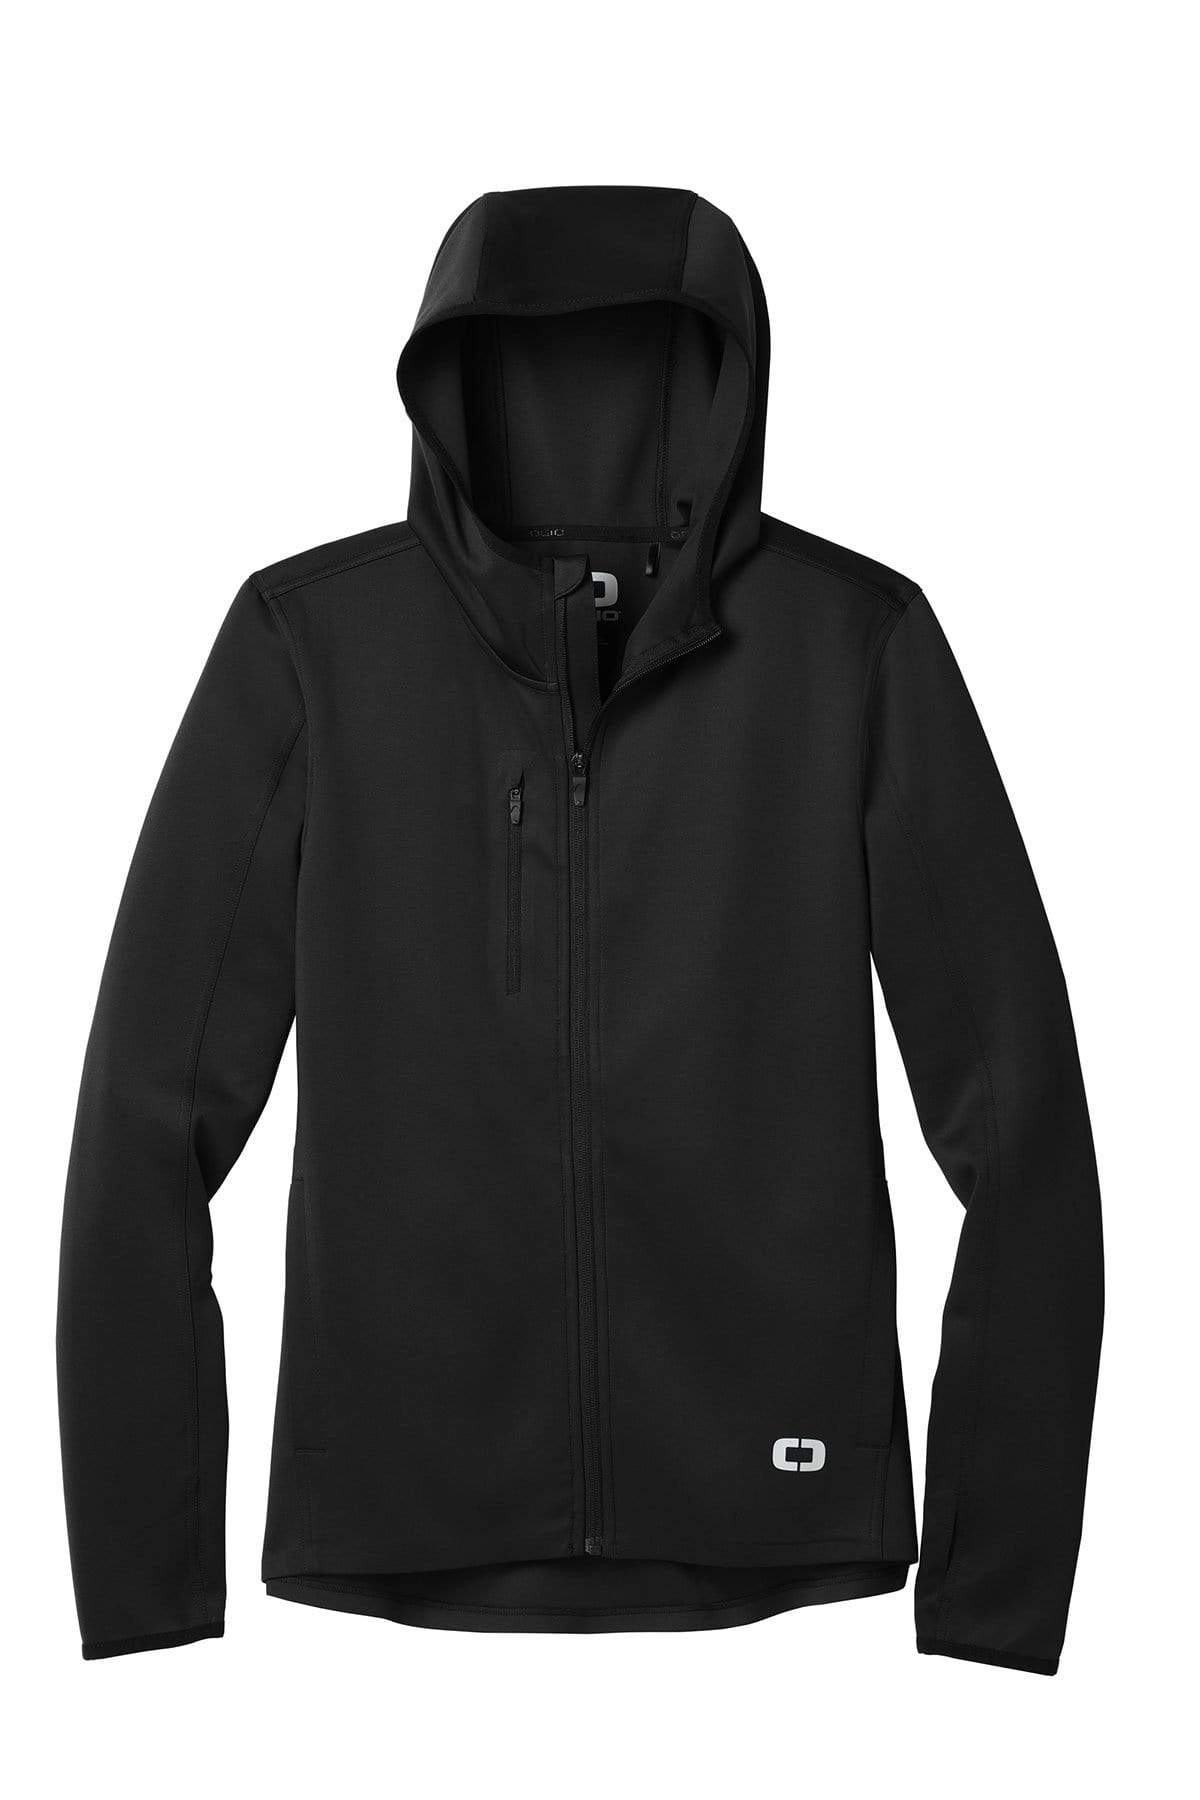 Blacktop / XS Custom OGIO ENDURANCE Stealth Full-Zip Jacket